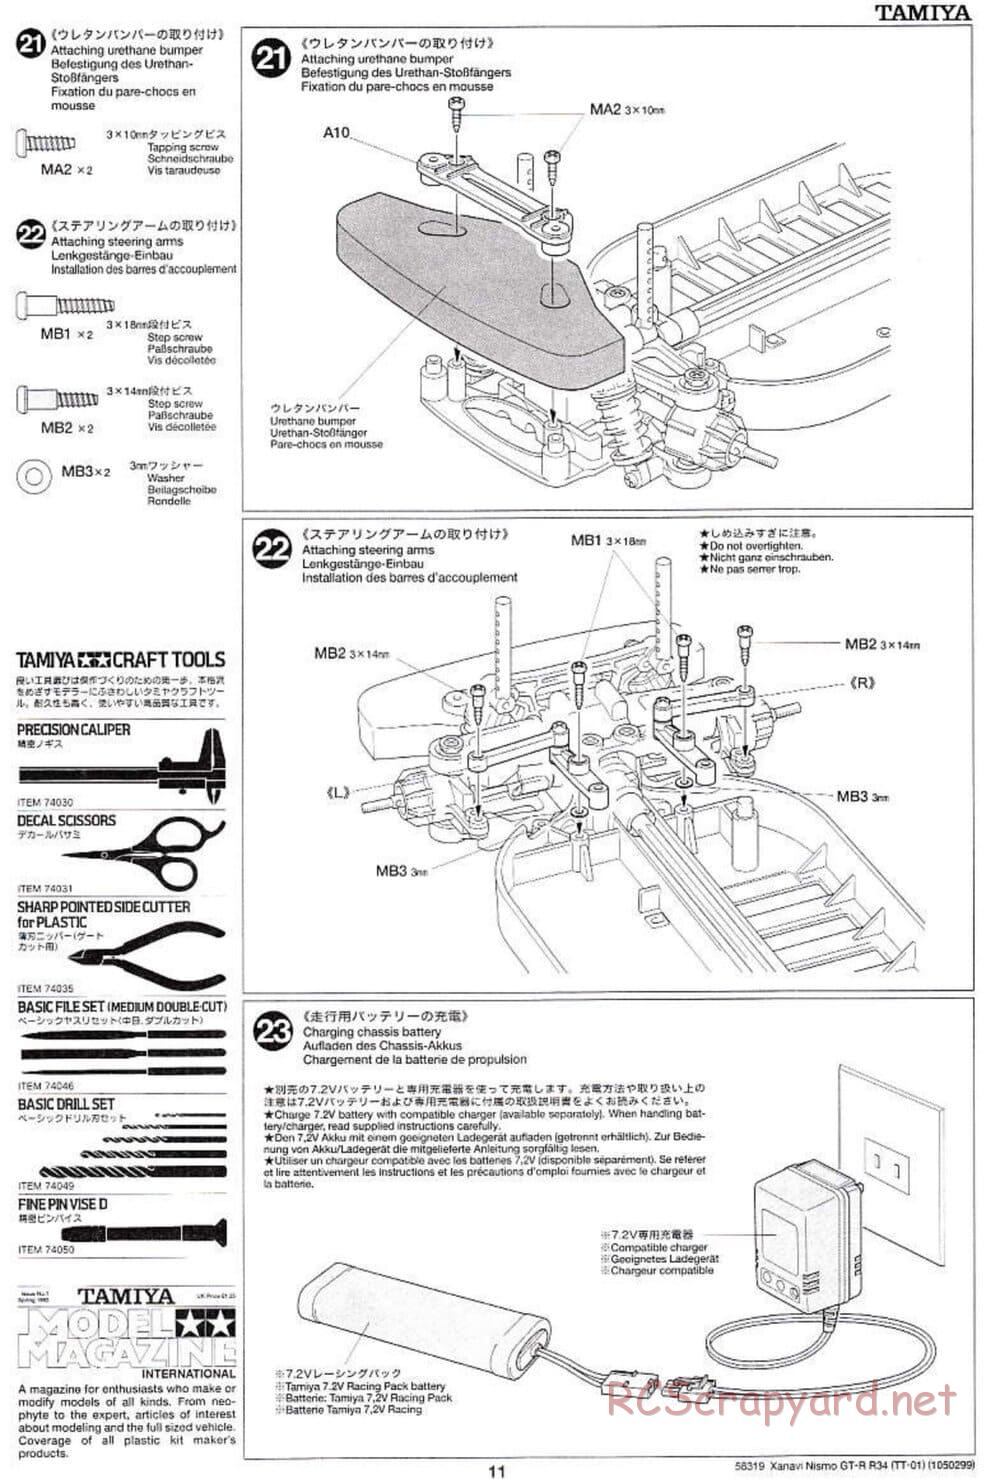 Tamiya - Xanavi Nismo GT-R R34 - TT-01 Chassis - Manual - Page 11